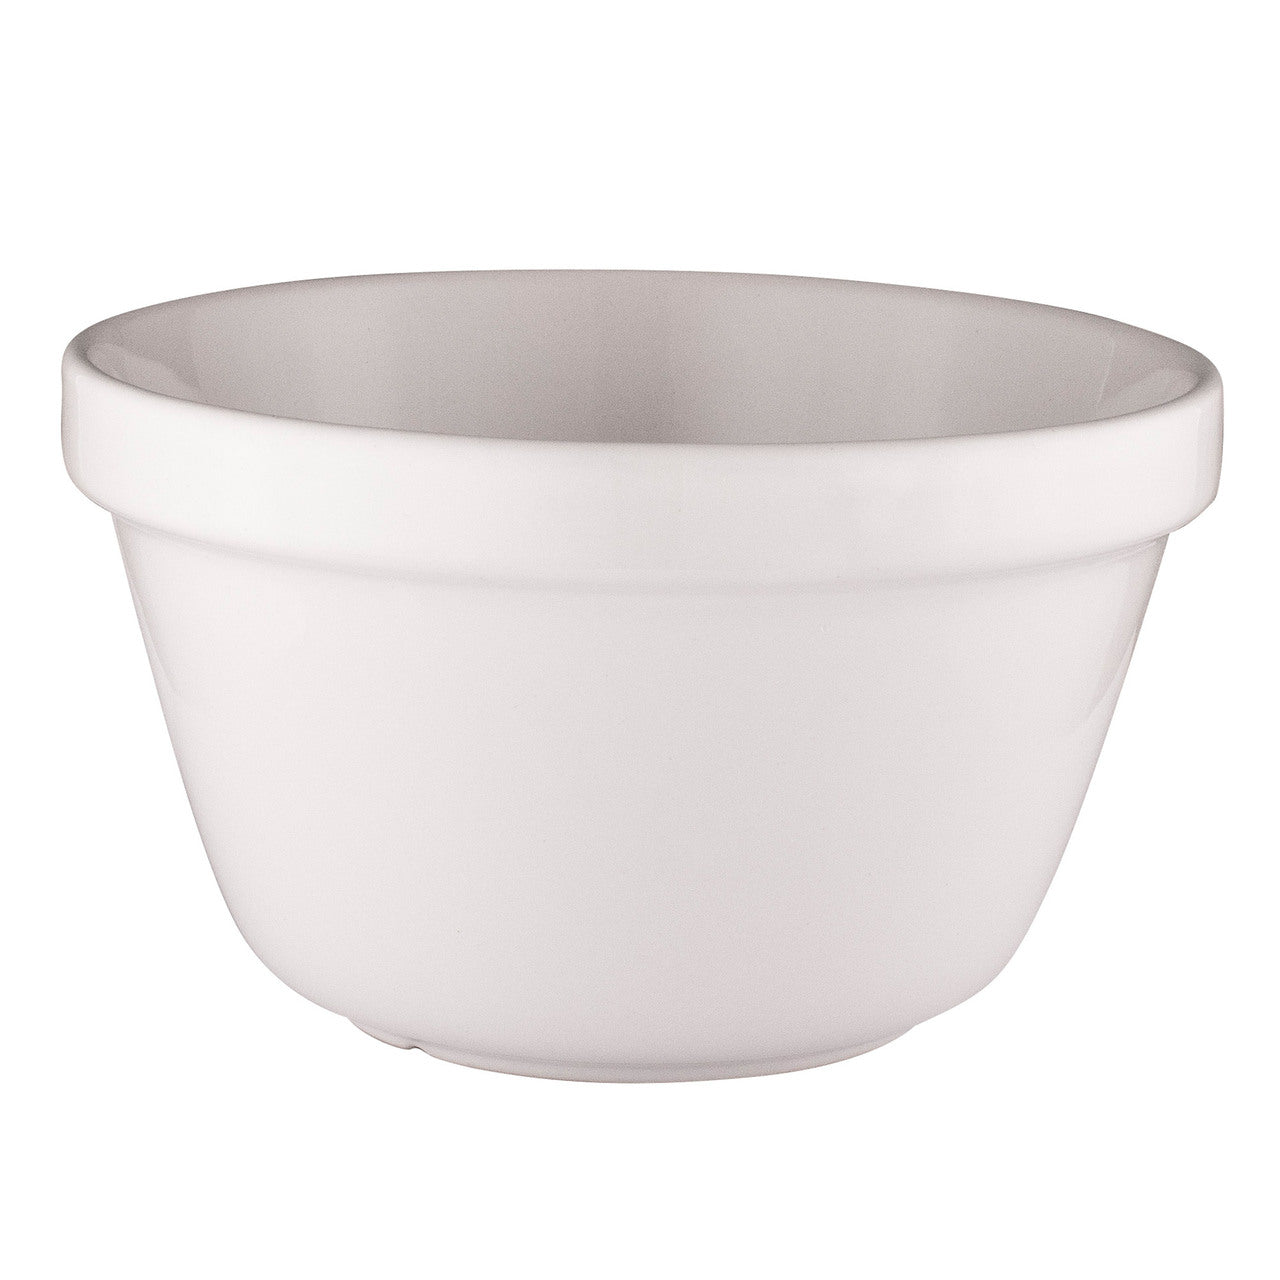 Avanti Pudding Bowl White 17.5cm